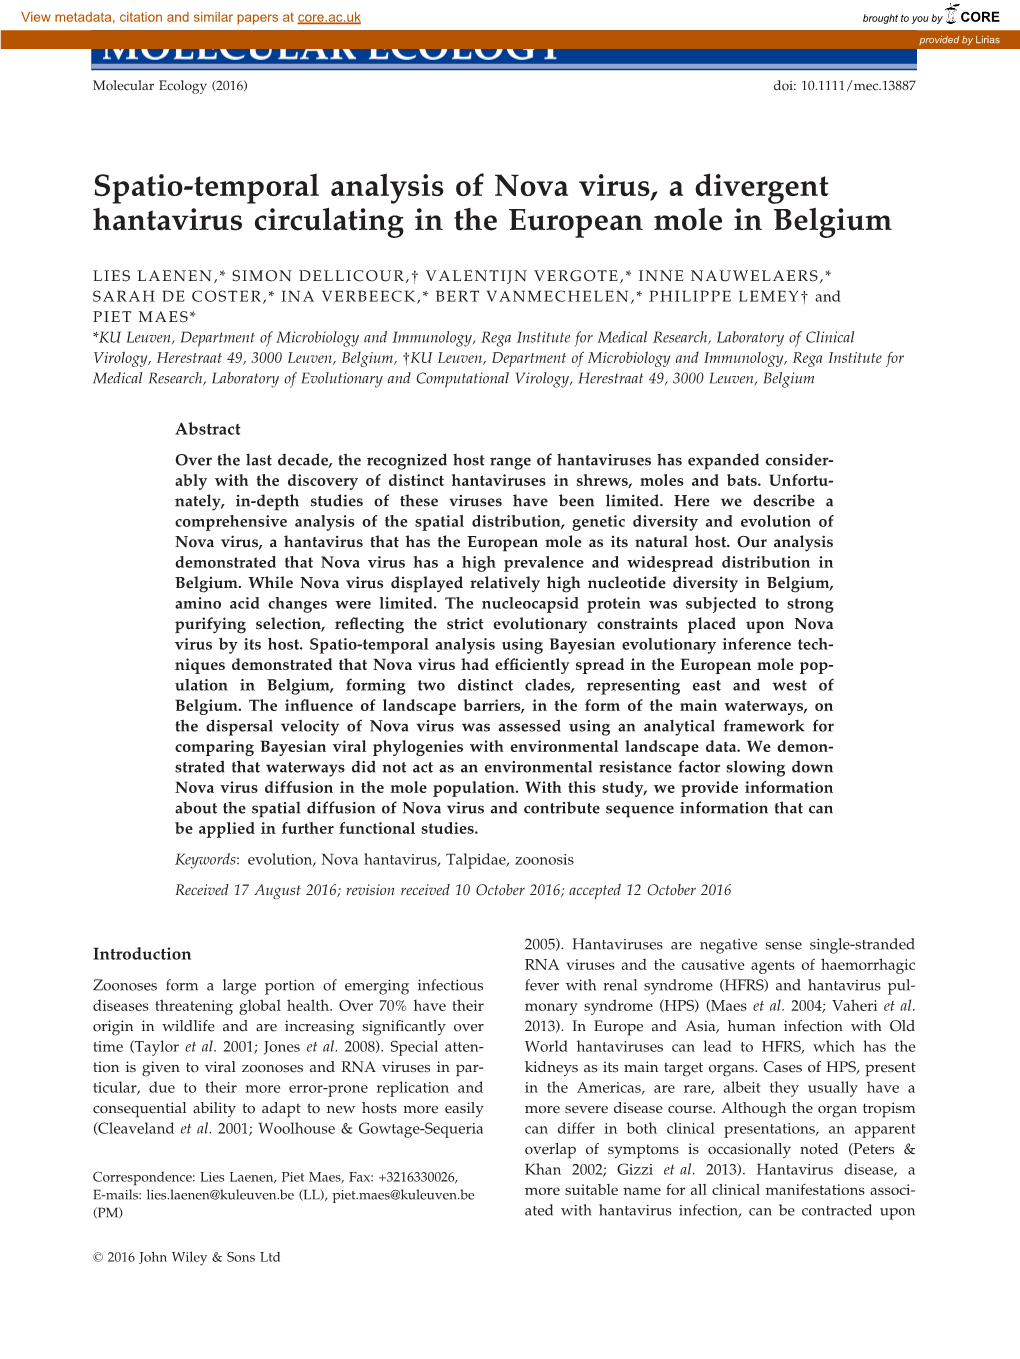 Spatio-Temporal Analysis of Nova Virus, a Divergent Hantavirus Circulating in the European Mole in Belgium